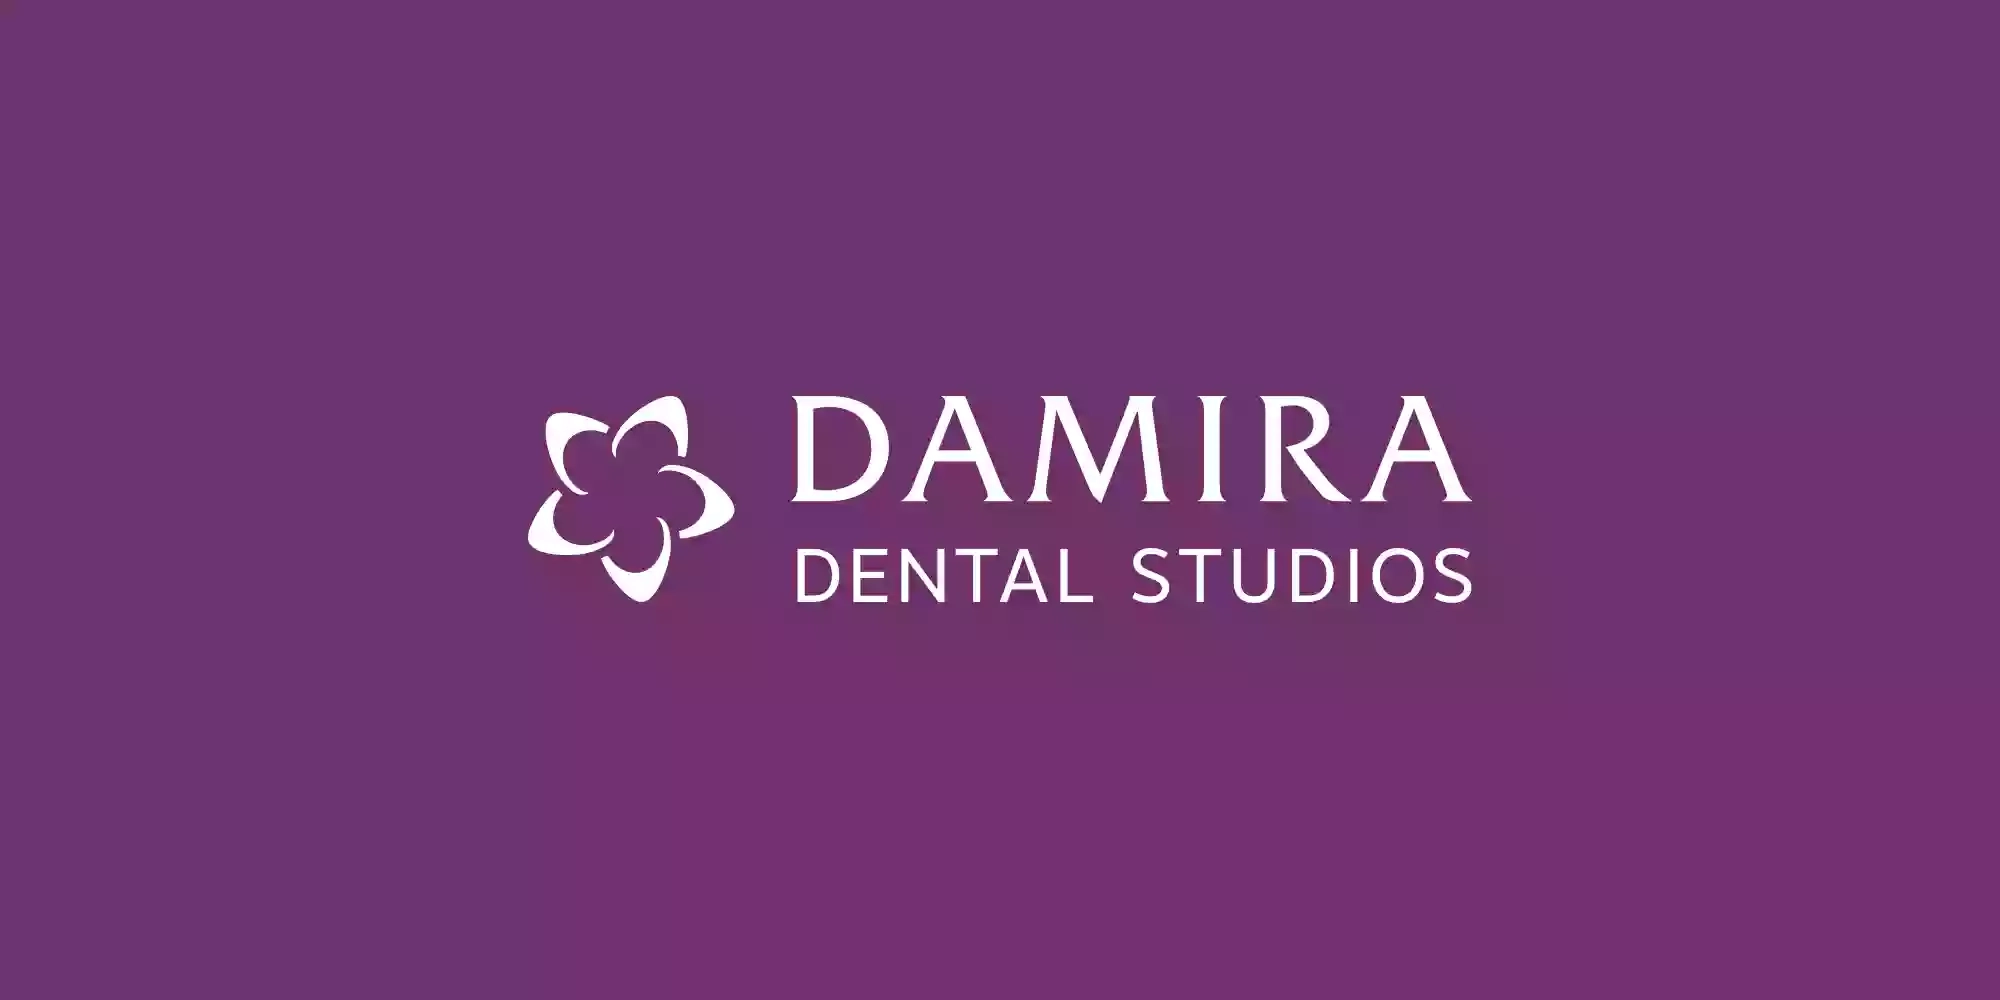 Damira West Street Dental Practice